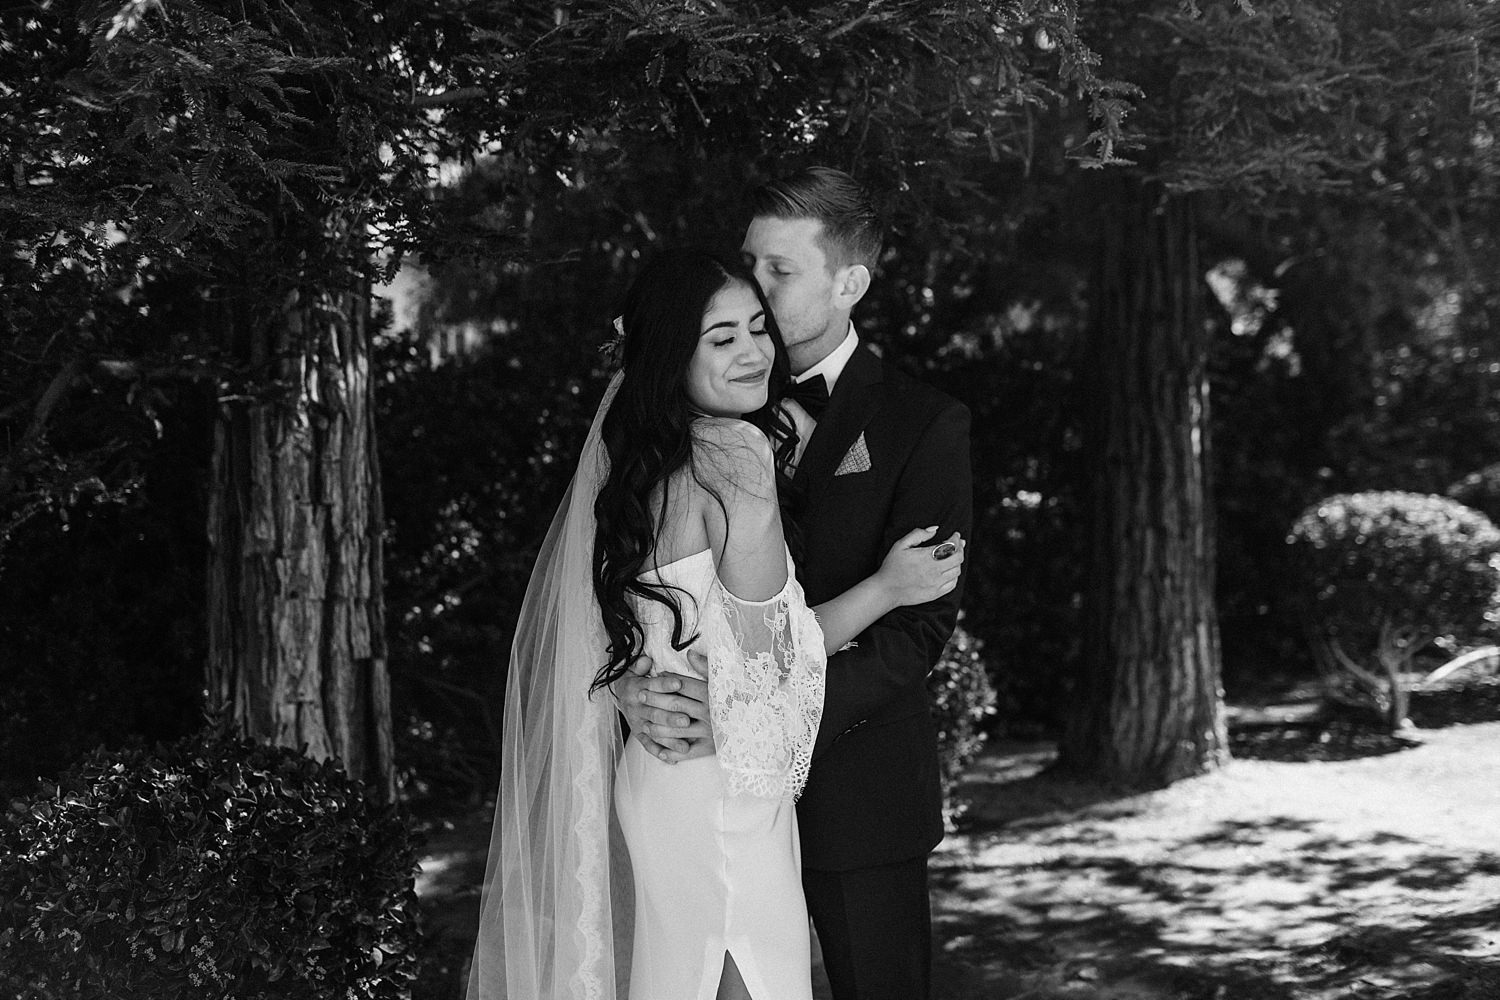 Los Angeles Wedding Photographer | https://alexandriamonette.com